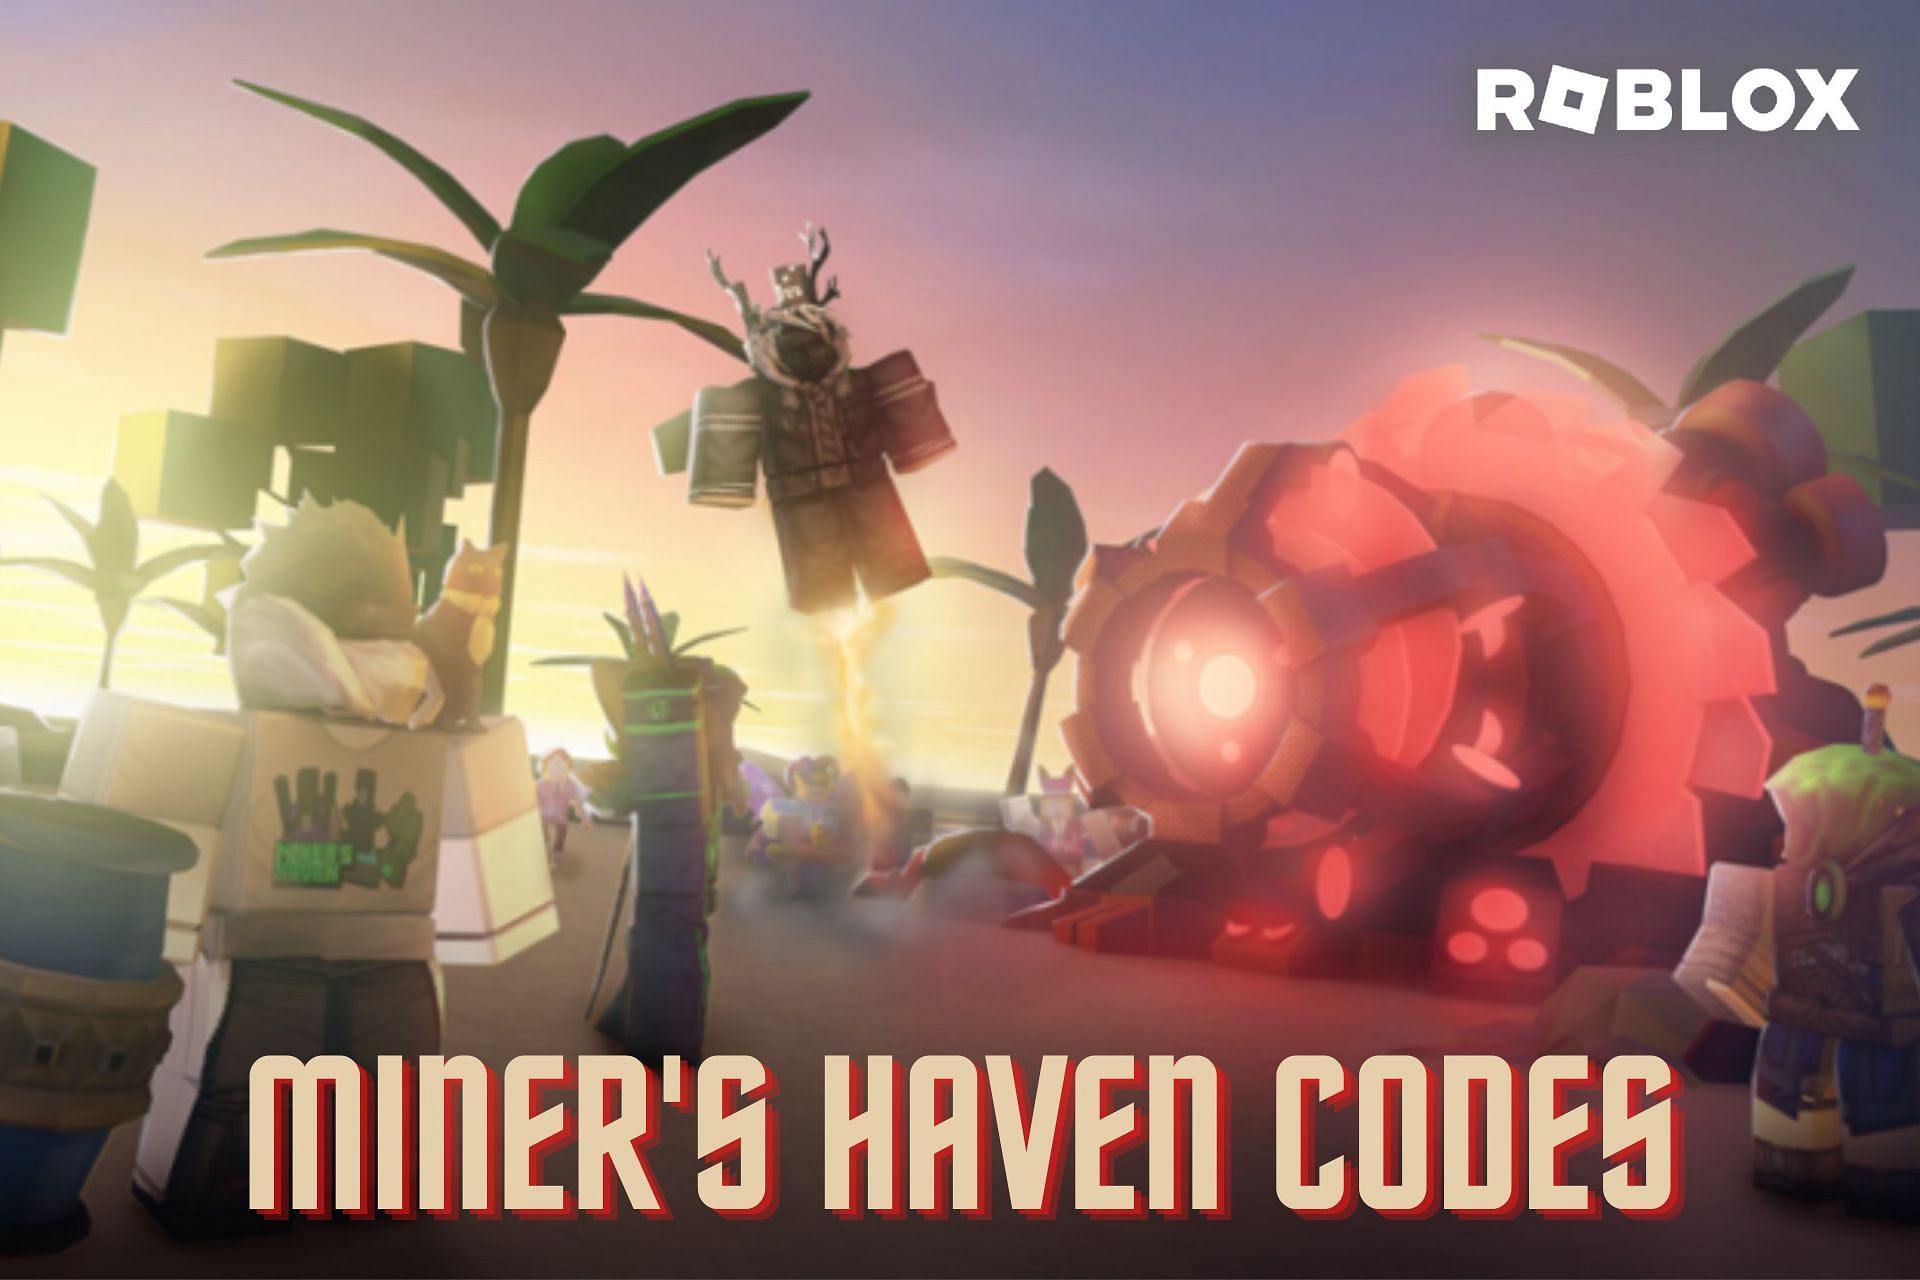 HEAVEN!] ⛏️ Block Miner Simulator Codes Wiki 2023